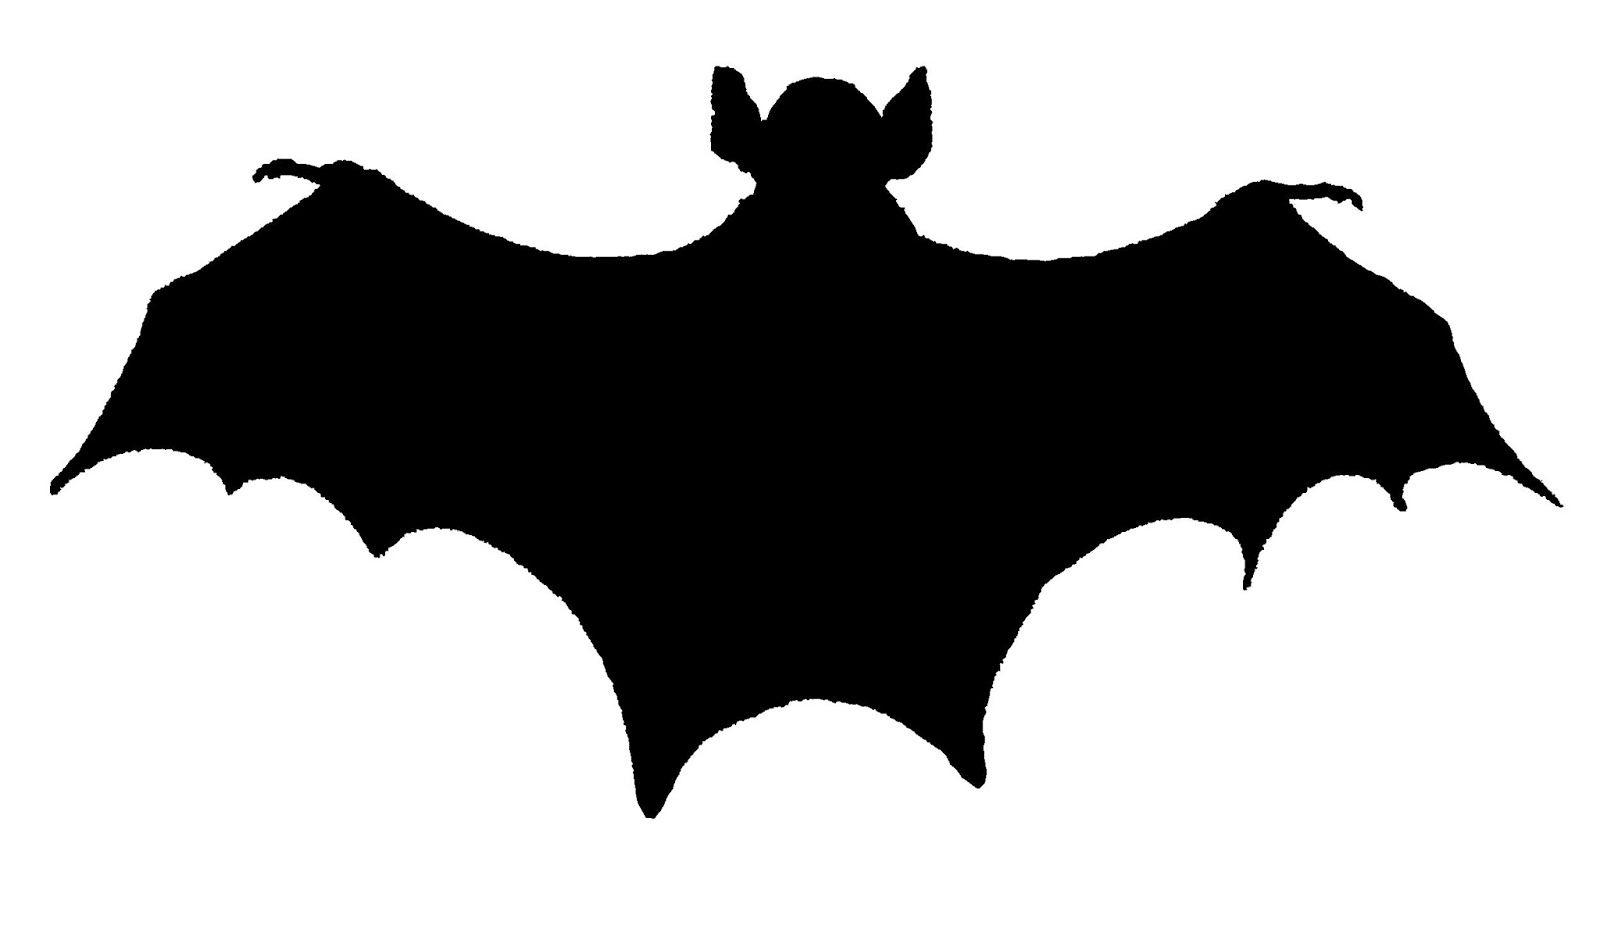 Bat Silhouette Images for Logo - Digital Stamp Design: Royalty Free Halloween Bat Silhouette Crafting ...